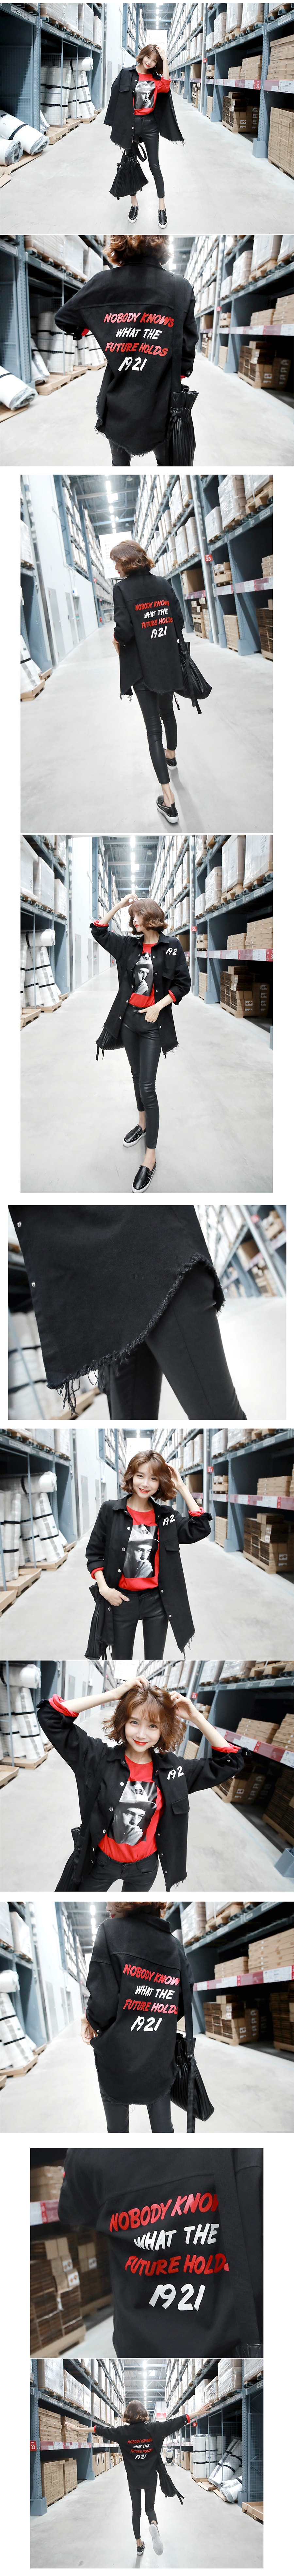 [KOREA] Oversized Back Print Vintage Jacket #Black One Size(Free) [免费配送]